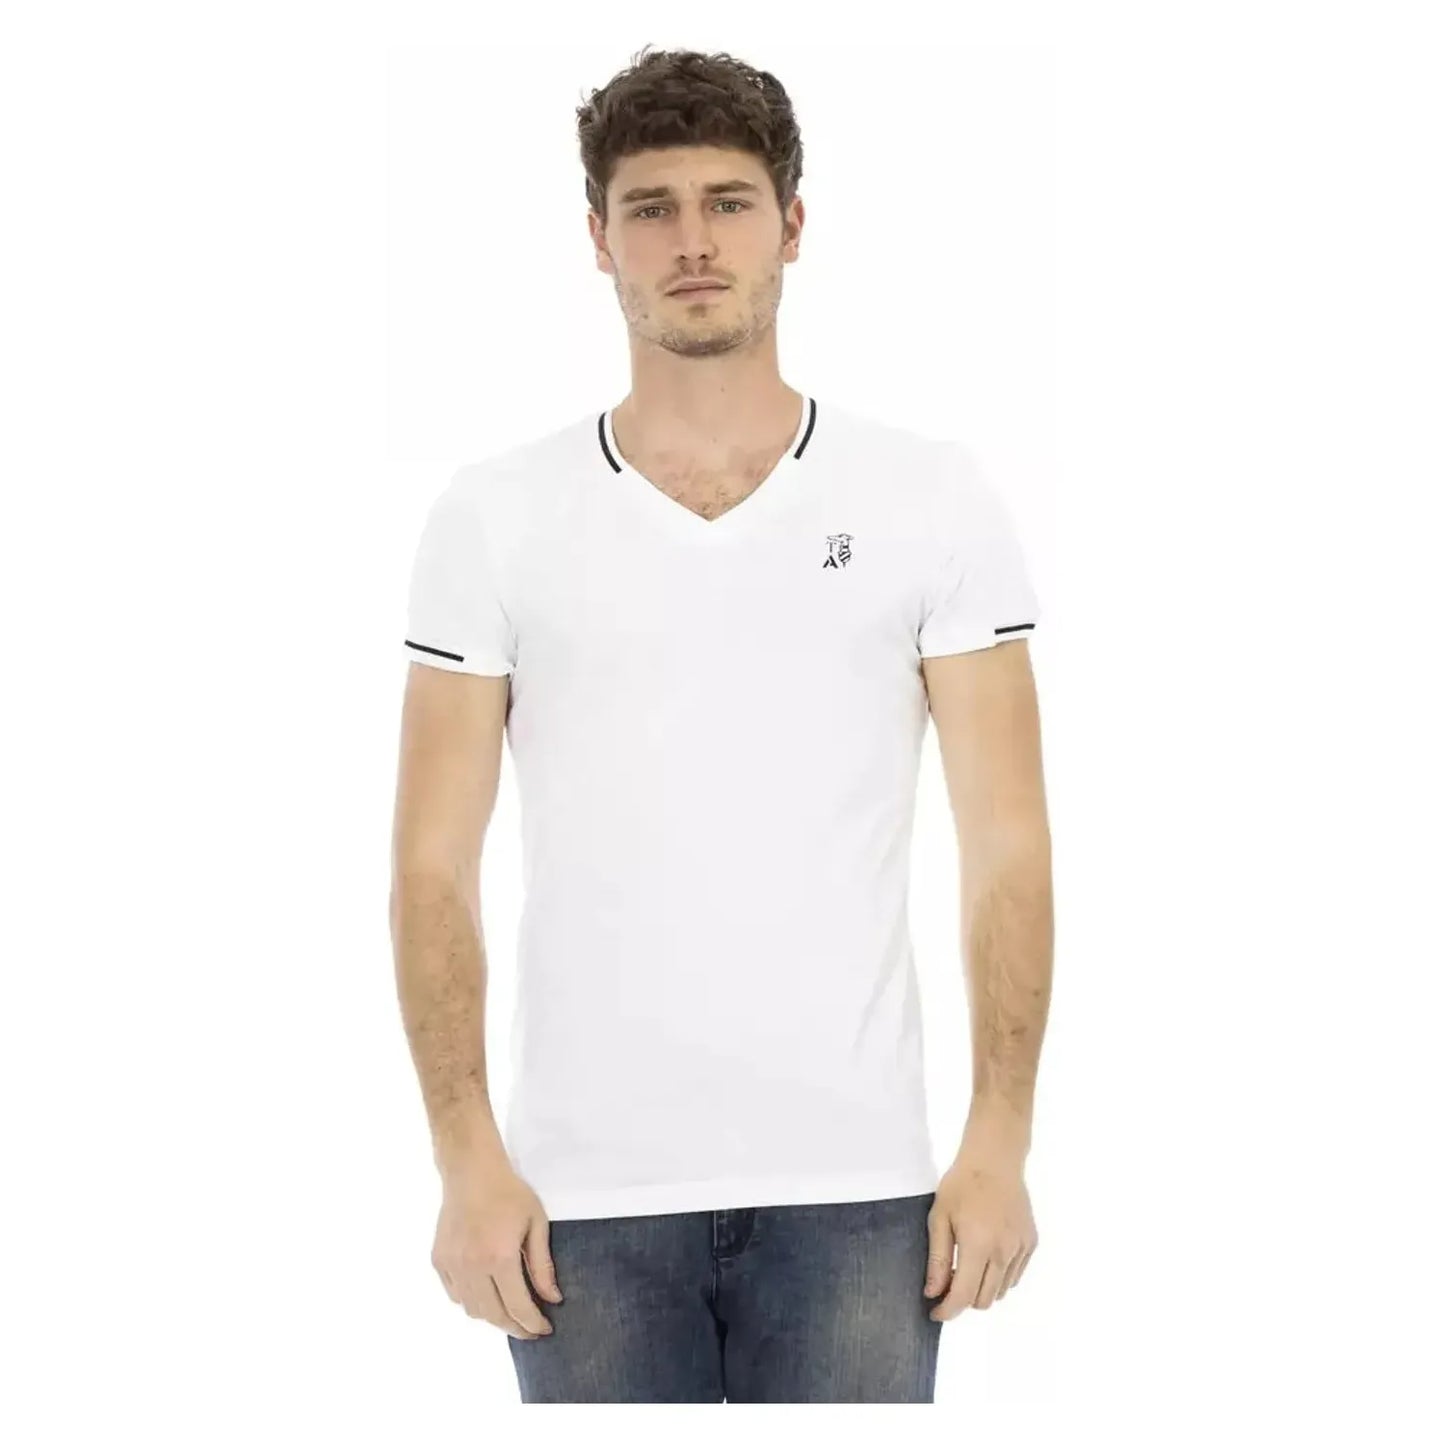 Trussardi Action Sleek V-Neck Tee with Chest Print white-cotton-t-shirt-59